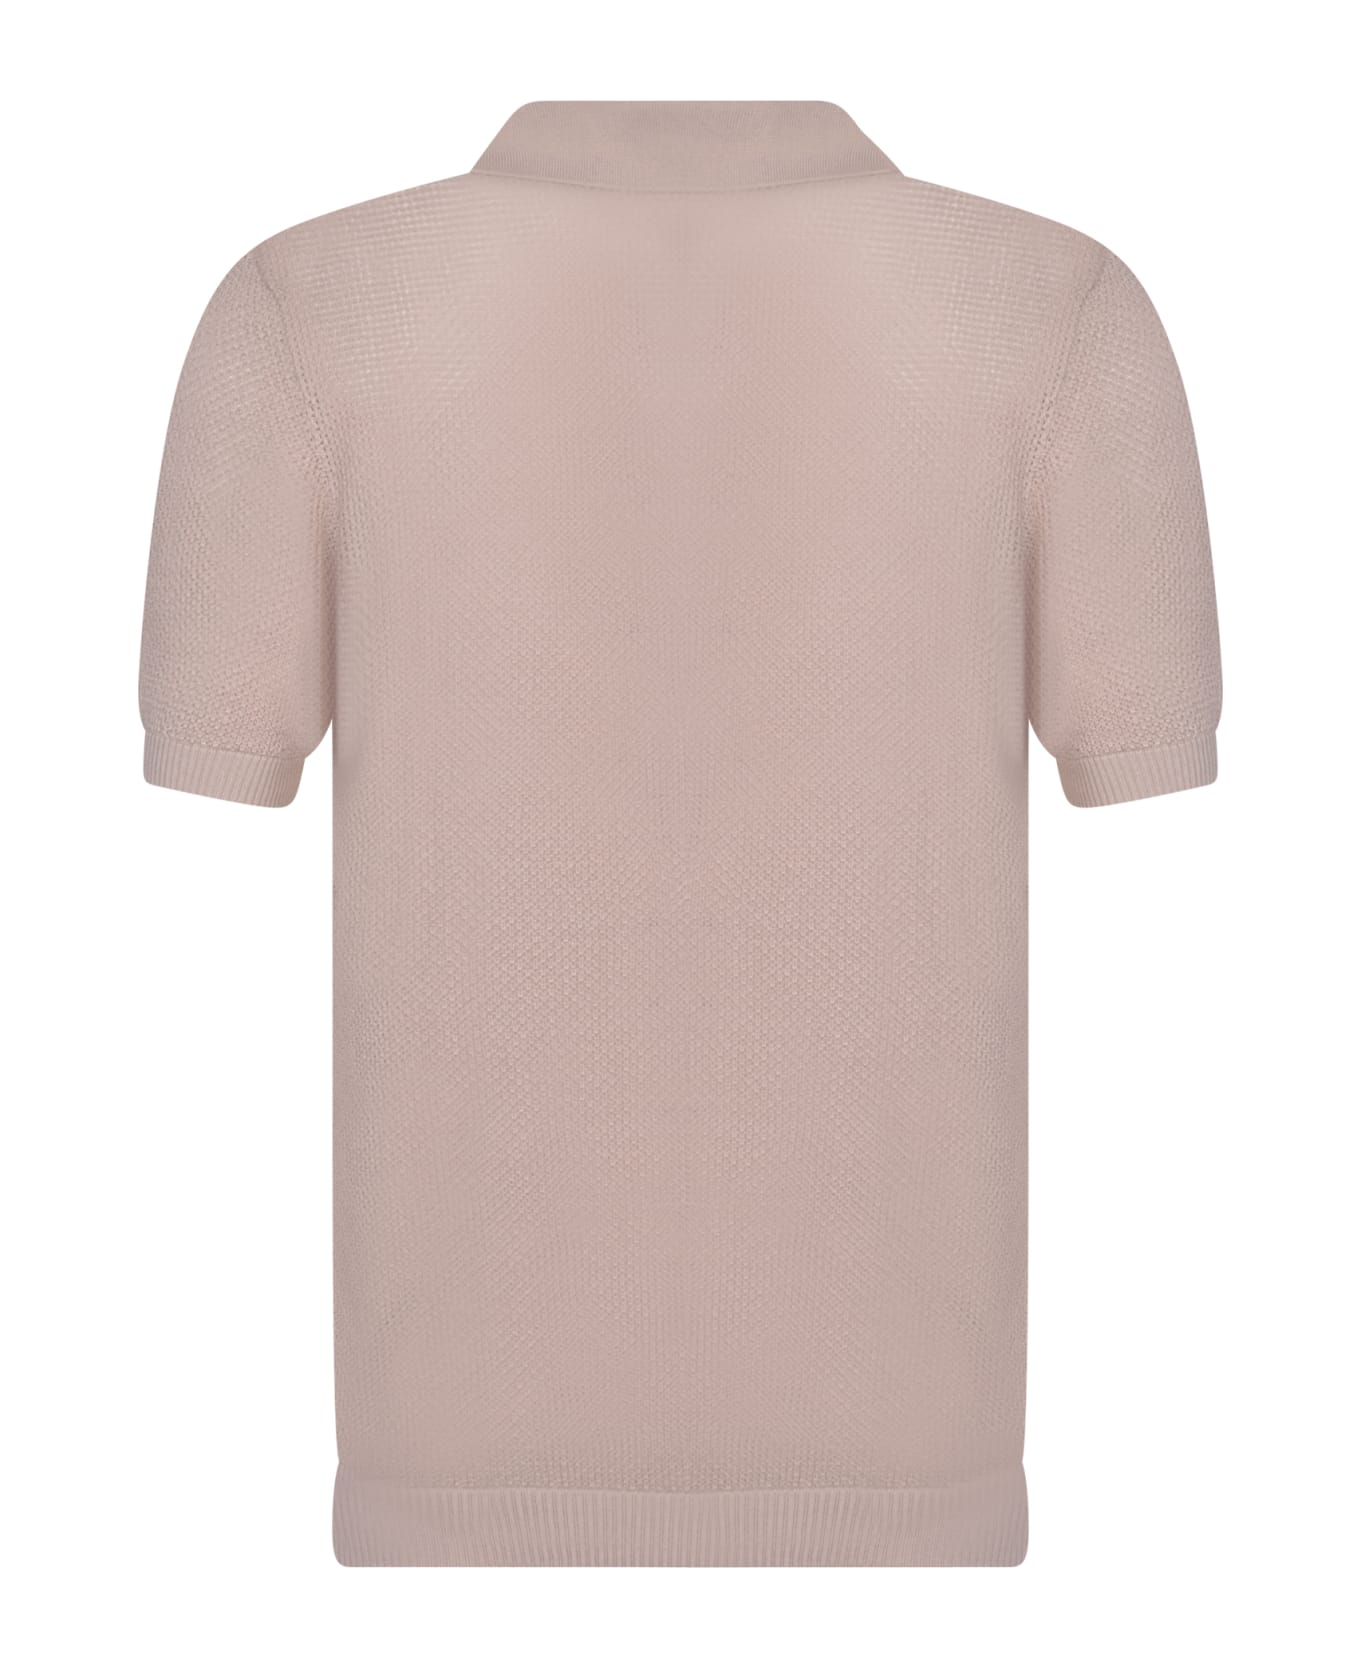 Tagliatore Crochet Taupe Polo Shirt - Beige ポロシャツ